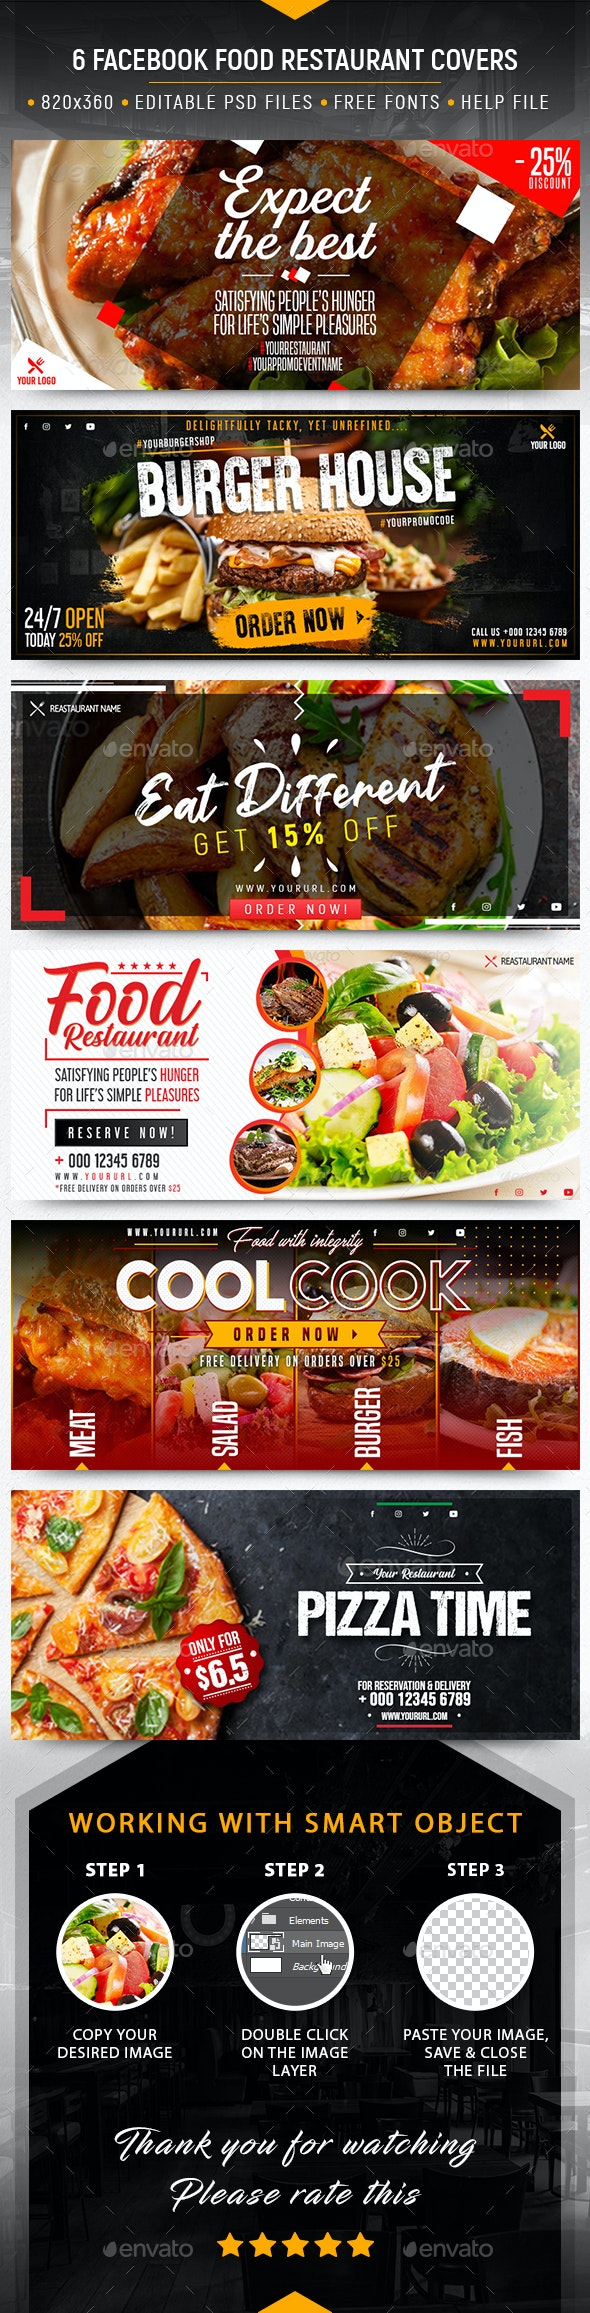 Facebook Food Restaurant Covers